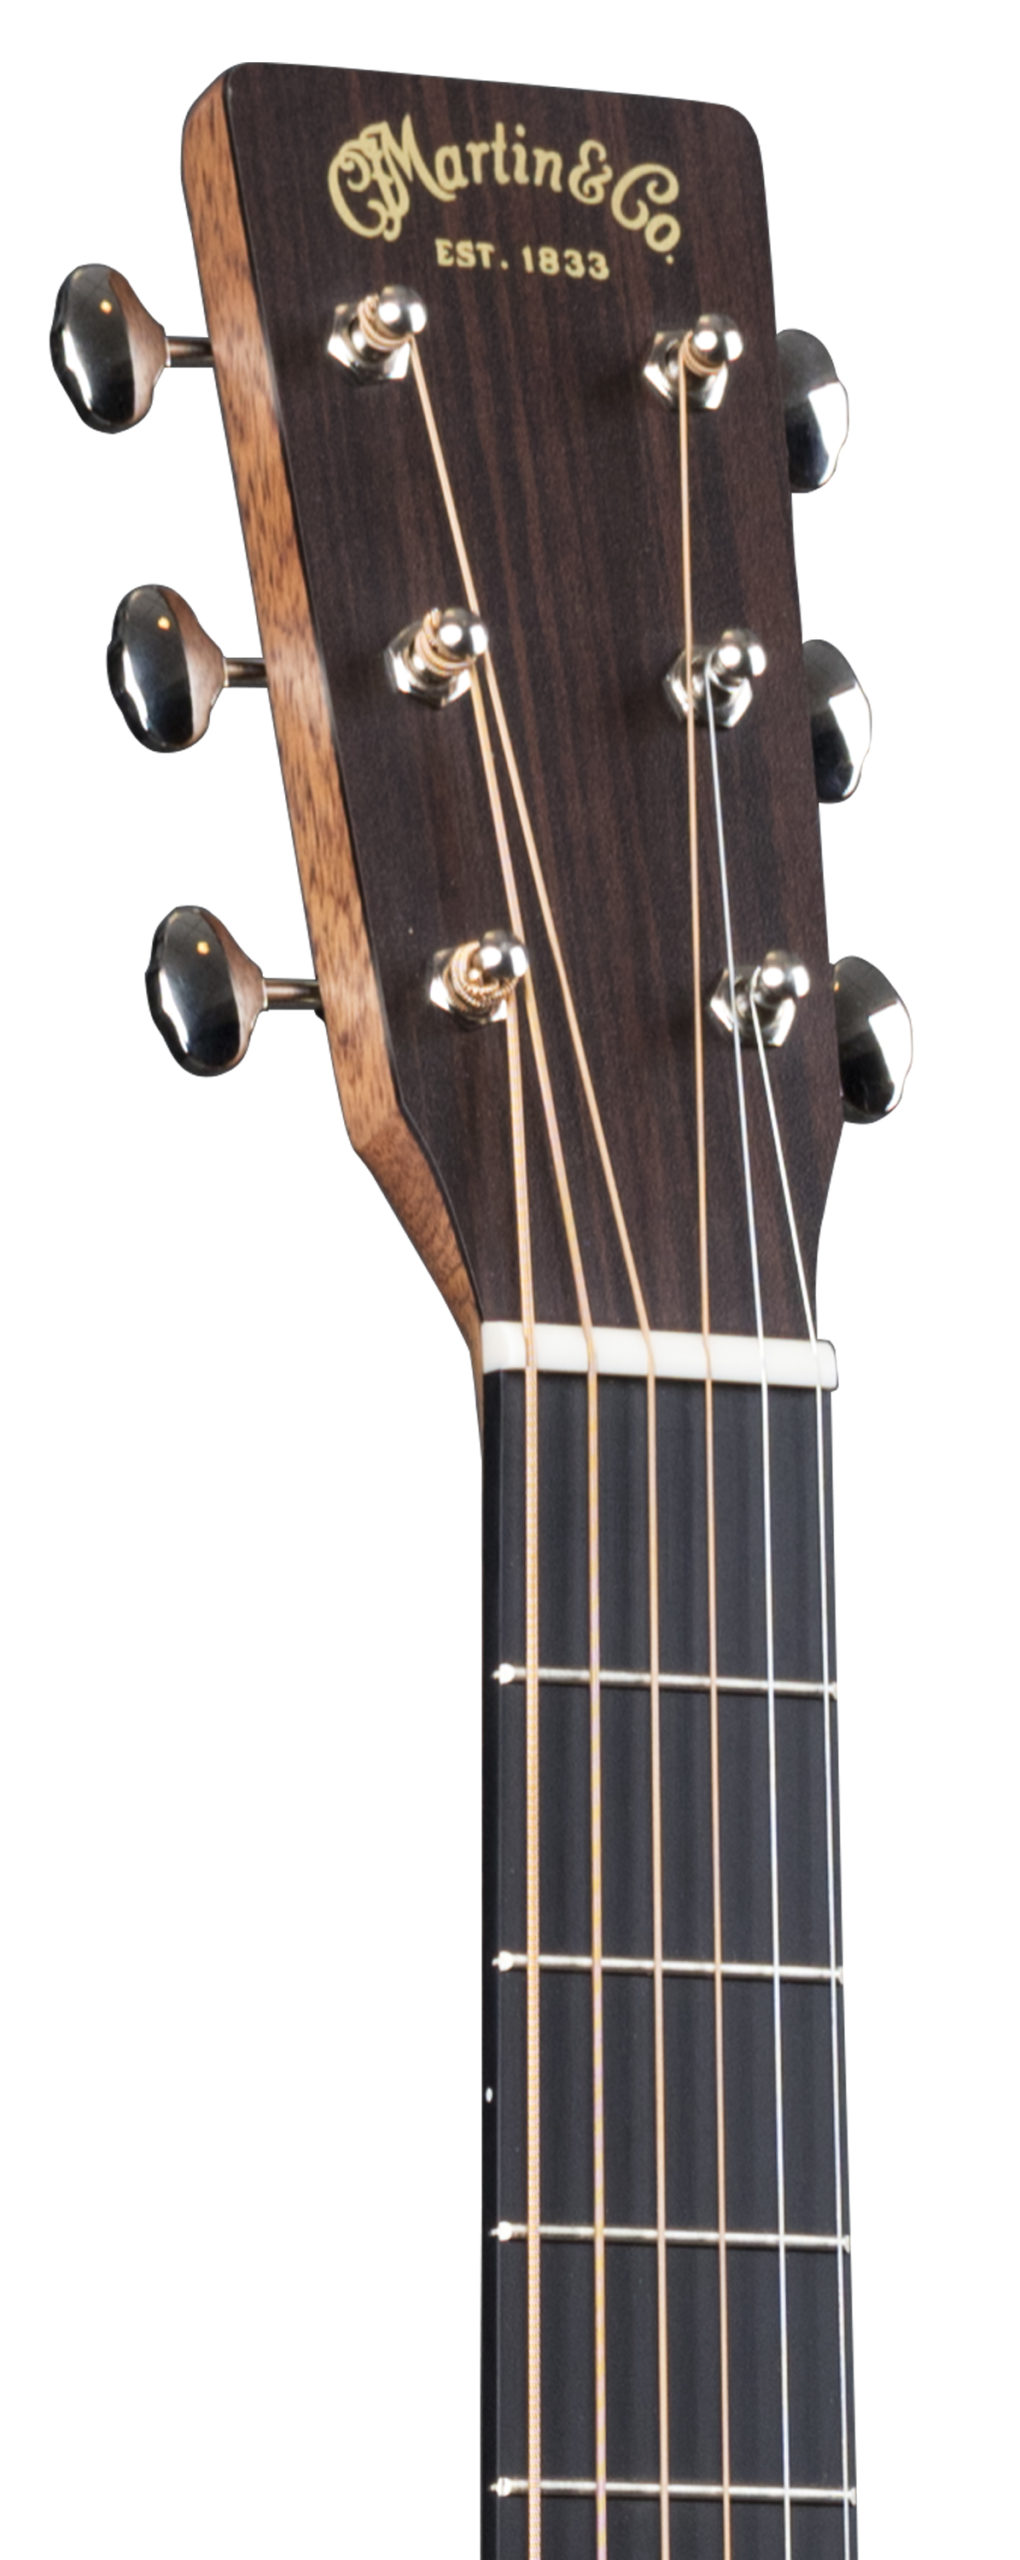 Martin D-12E Guitar